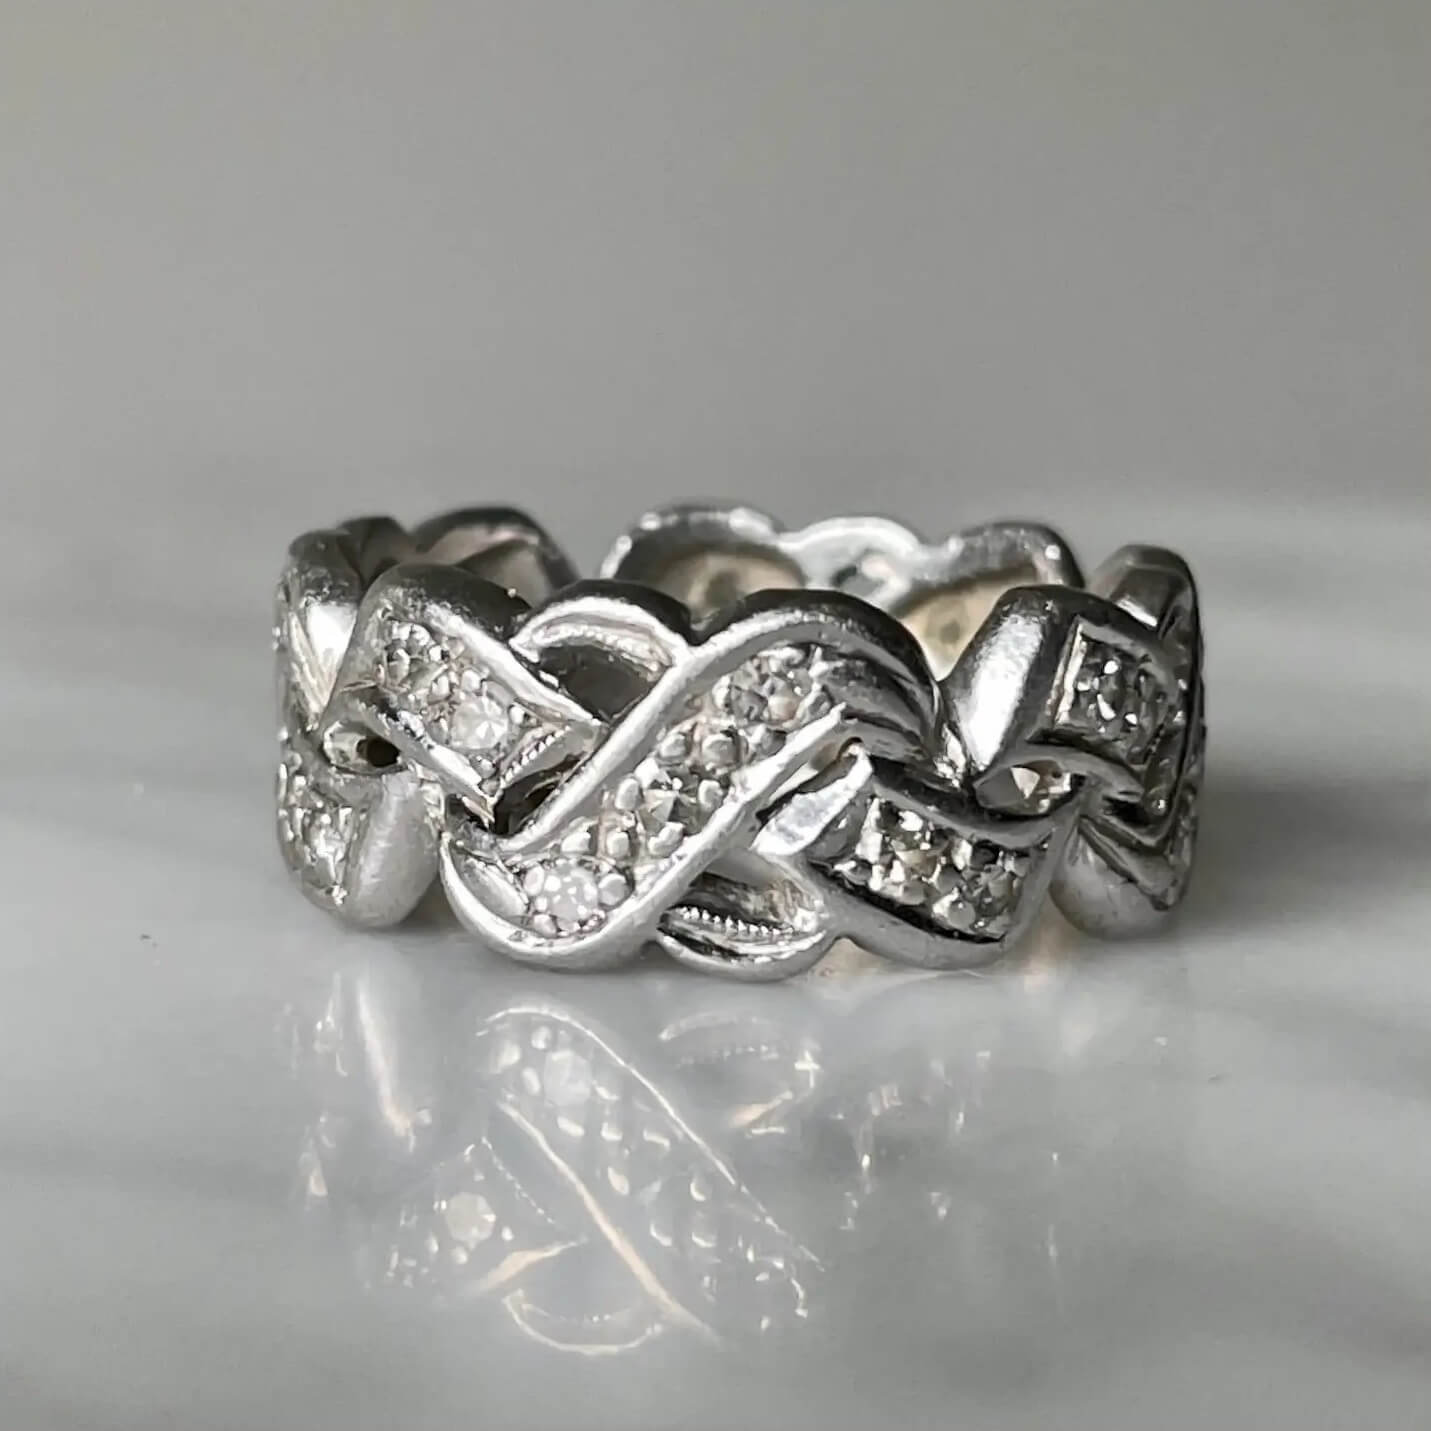 Braided Wedding Ring, Infinity Diamond Ring, Diamond Wedding Ring